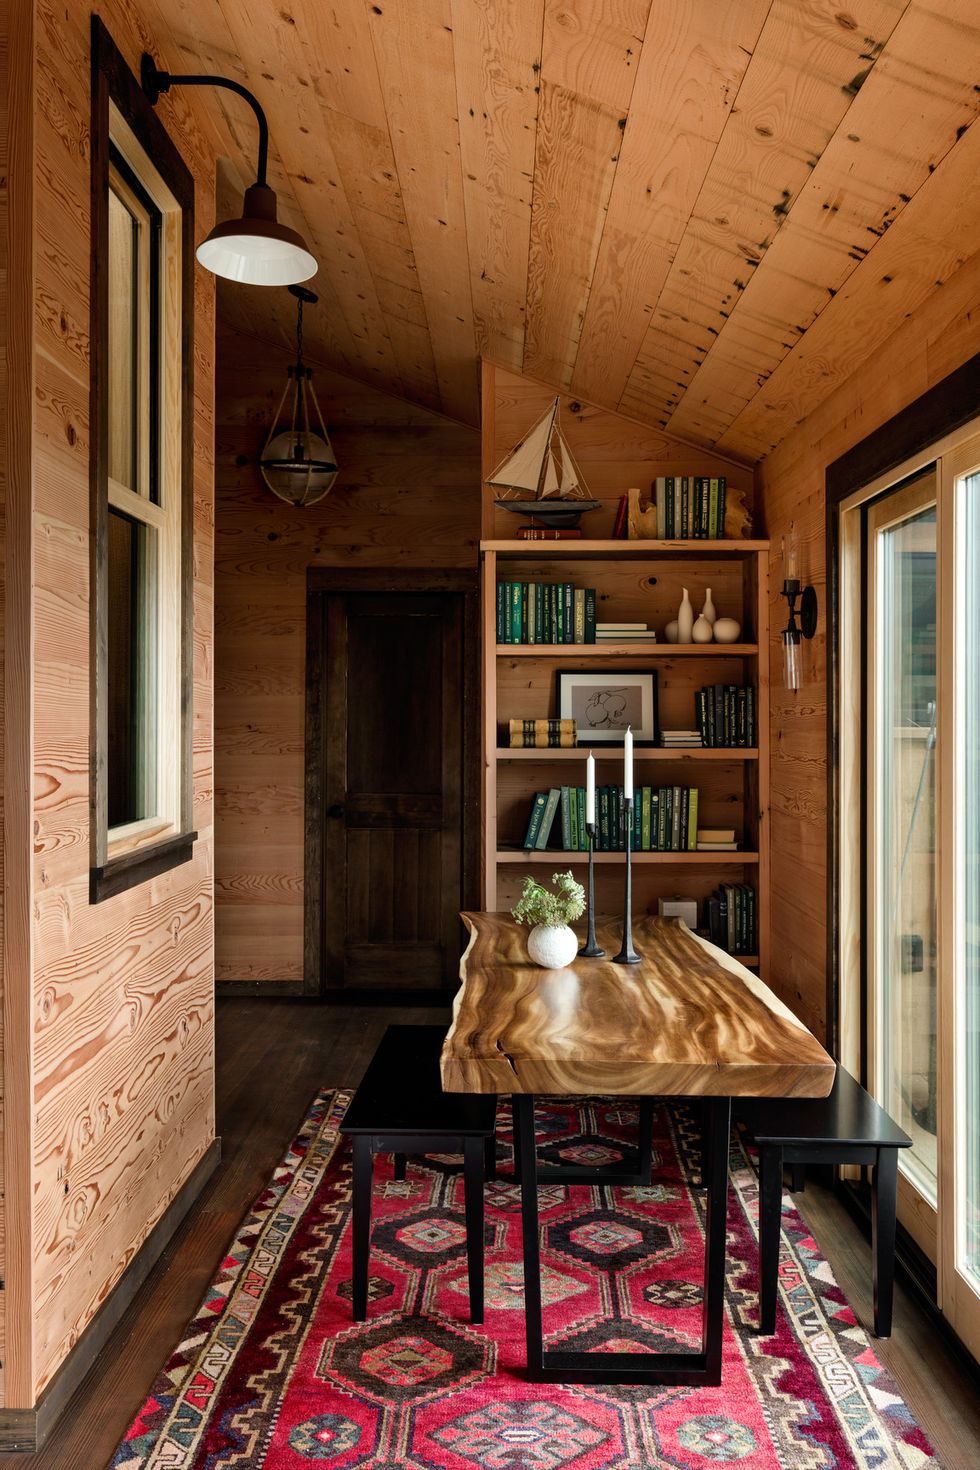 Design Trend We Love: Wood Slats